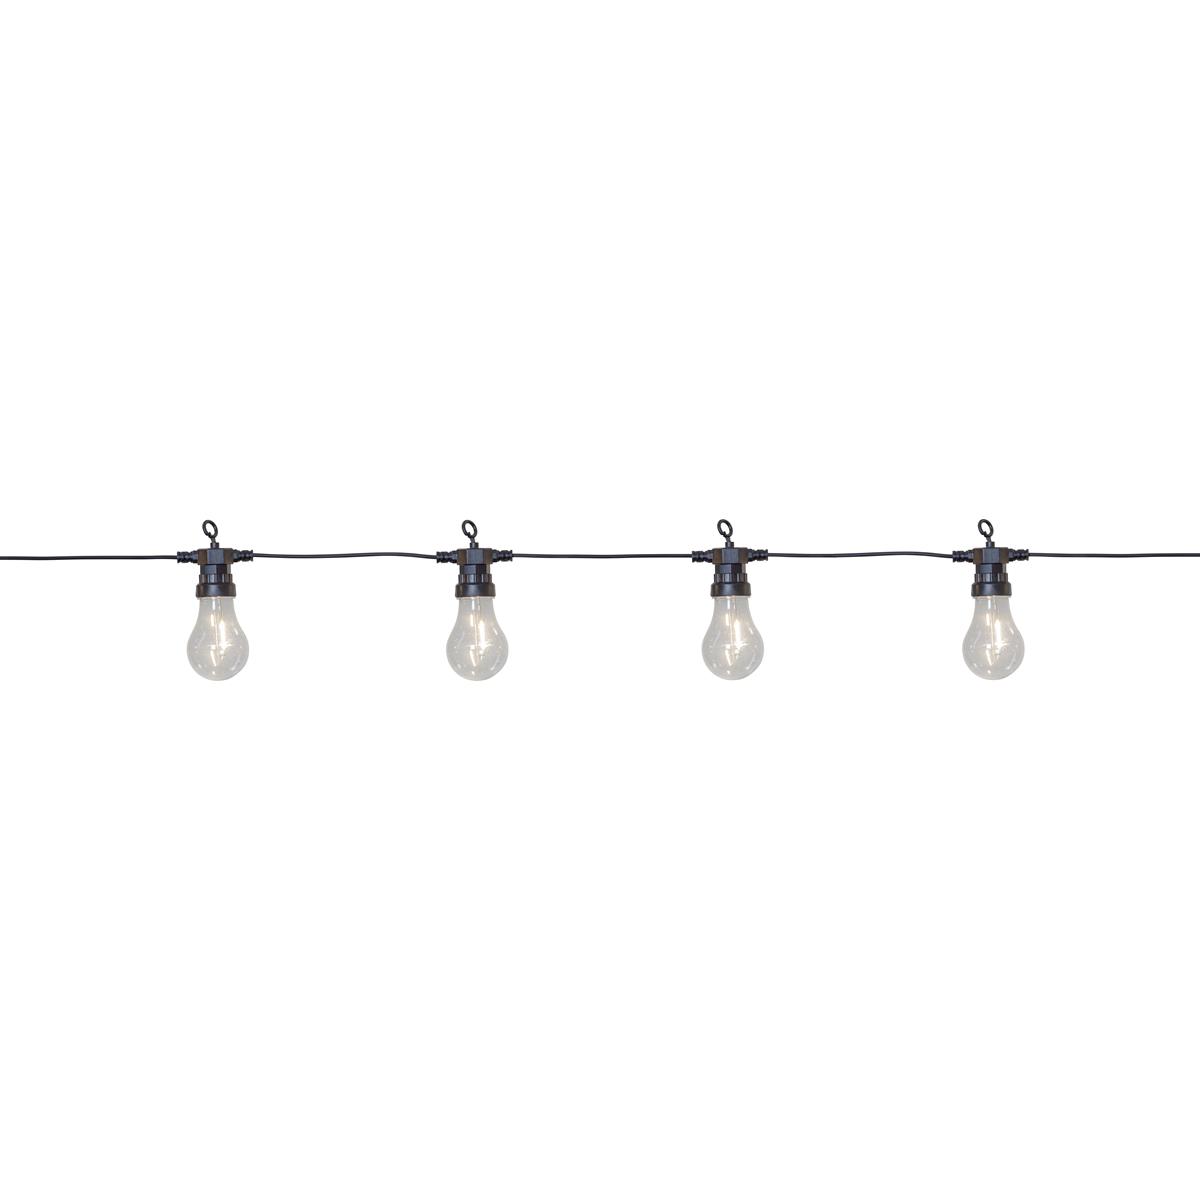 LED Lichterkette "Circus Filament" - 10 Birnen - warmweiße Filament LED - 4,05m - Trafo - outdoor